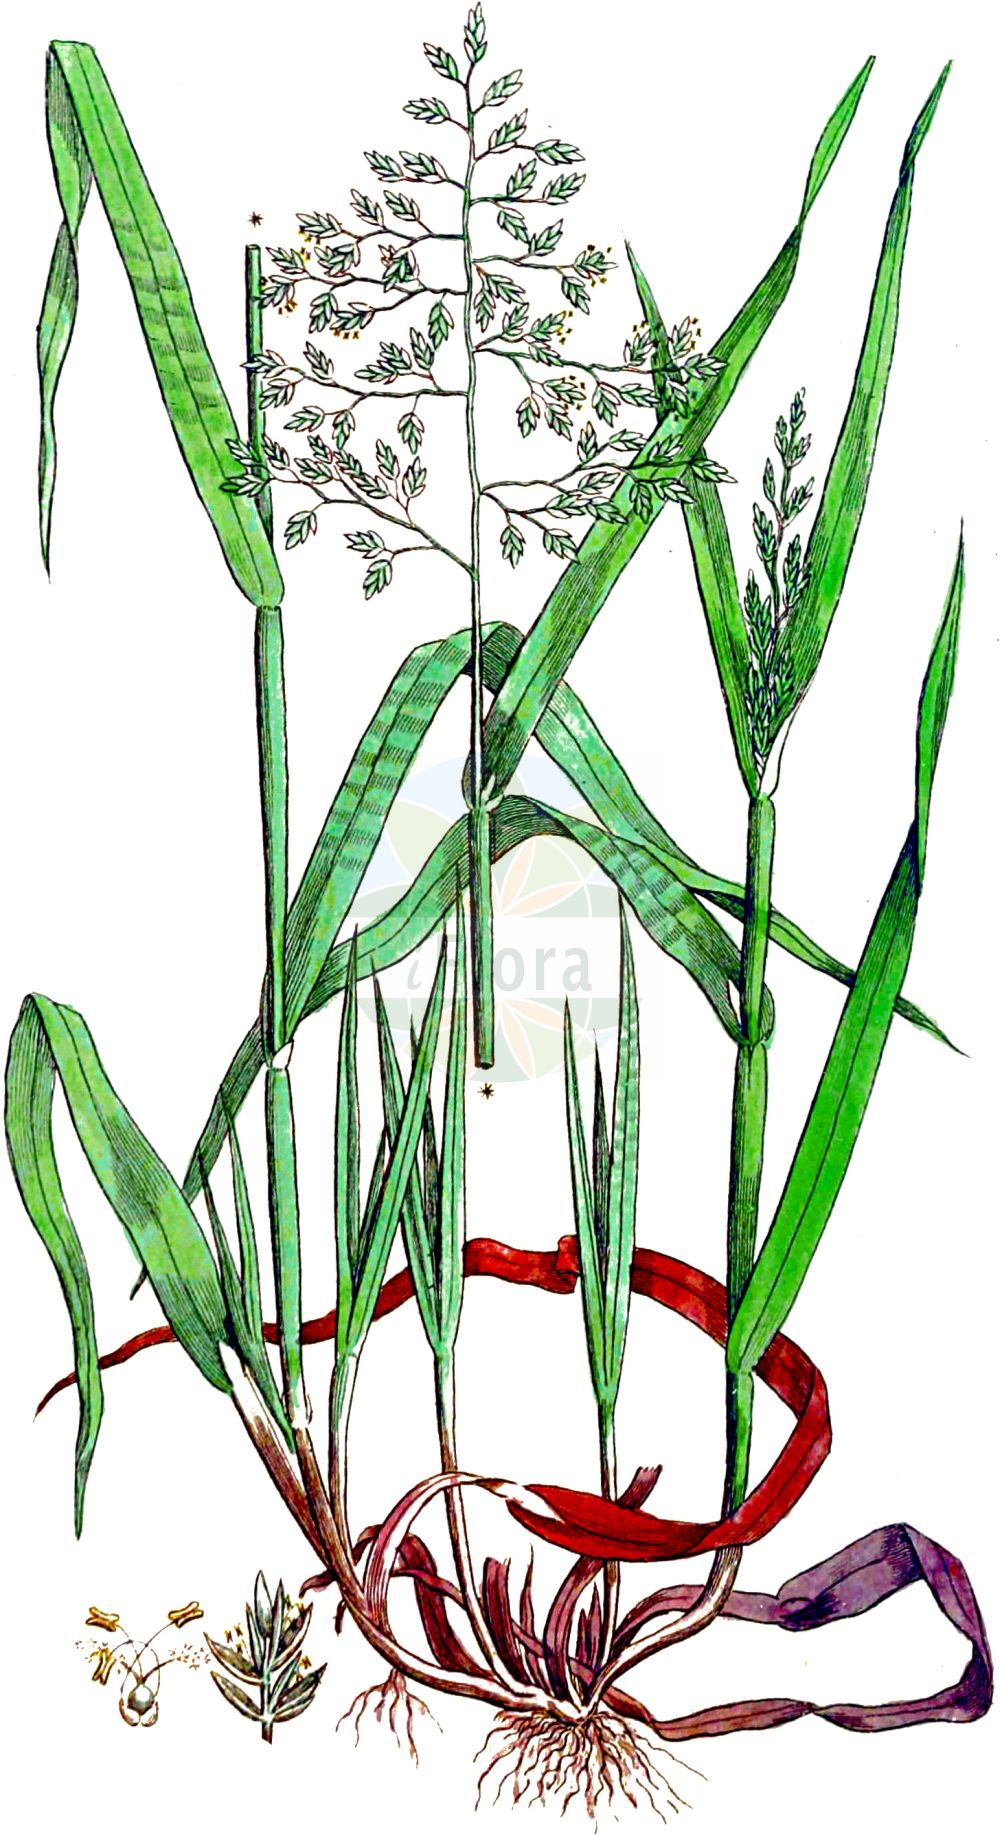 Historische Abbildung von Ochlopoa annua (Einjähriges Rispengras - Annual Meadow-grass). Das Bild zeigt Blatt, Bluete, Frucht und Same. ---- Historical Drawing of Ochlopoa annua (Einjähriges Rispengras - Annual Meadow-grass). The image is showing leaf, flower, fruit and seed.(Ochlopoa annua,Einjähriges Rispengras,Annual Meadow-grass,Ochlopoa annua,Poa annua,Einjaehriges Rispengras,Annual Meadow-grass,Annual Bluegrass,Goosegrass,Pathgrass,Wintergrass,Ochlopoa,Poaceae,Süßgräser,Grass family,Blatt,Bluete,Frucht,Same,leaf,flower,fruit,seed,Svensk Botanik (Svensk Botanik))